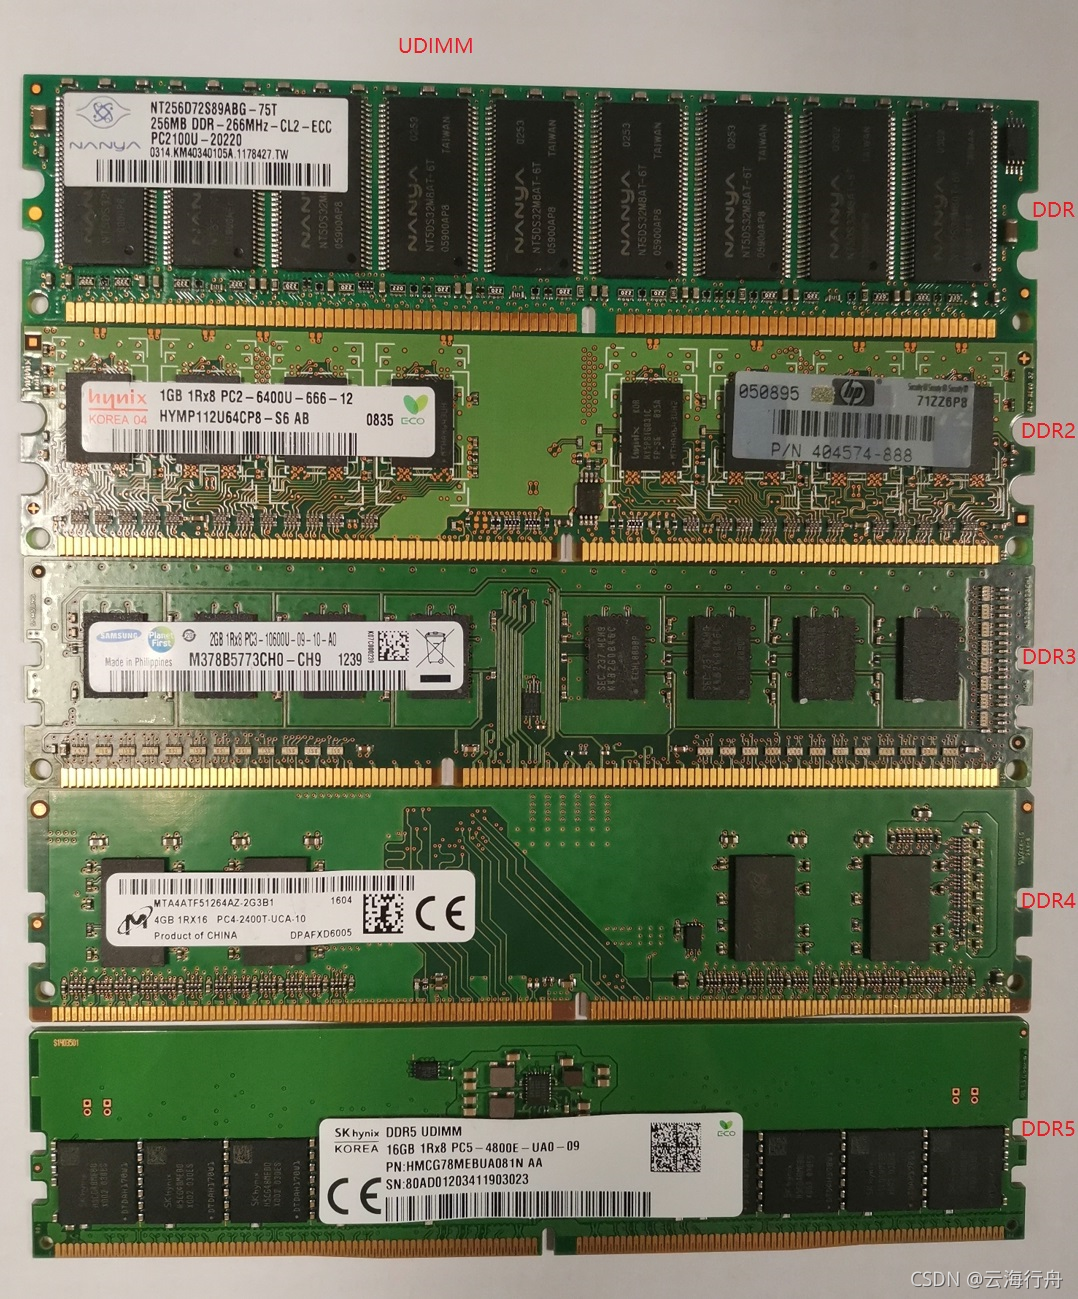 EP45T 主板是否支持 DDR3 内存？探究其背后的神秘与挑战  第2张